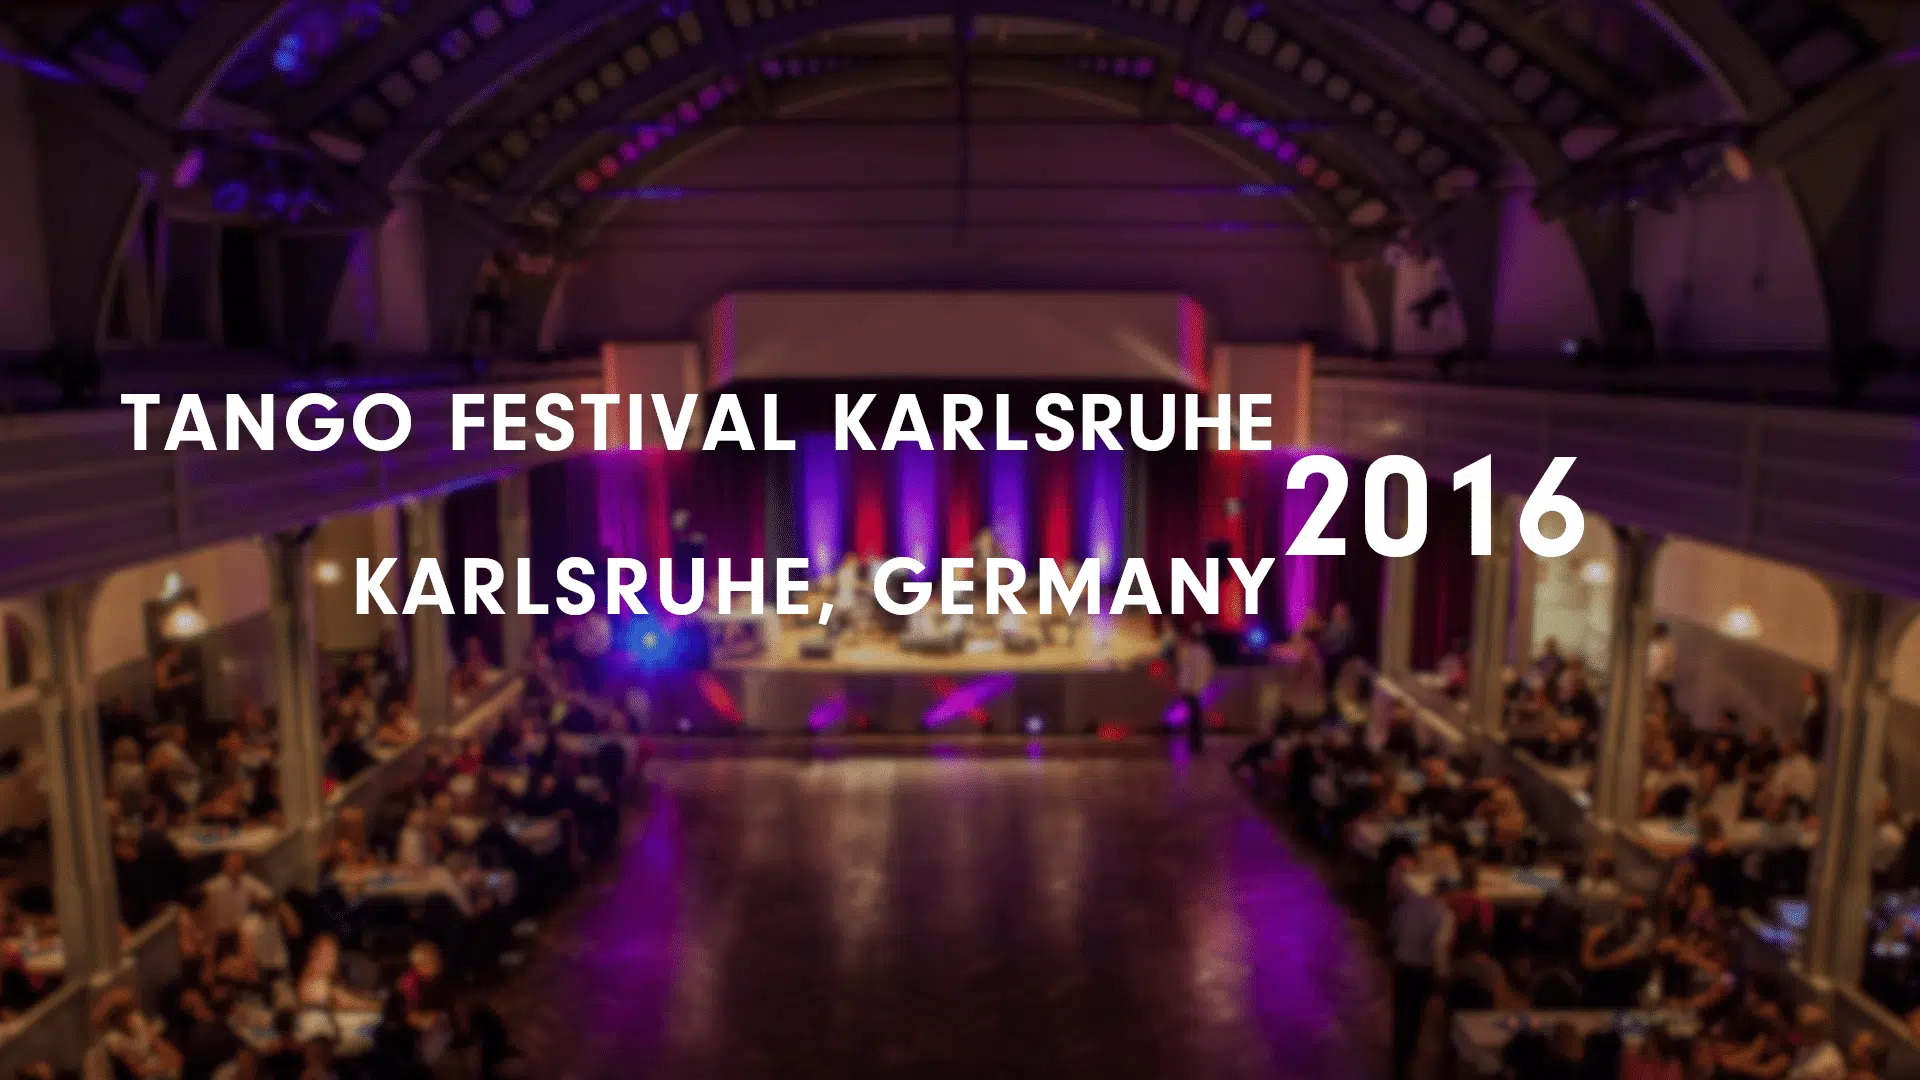 Tango Festival Karlsruhe 2016 Preview Image